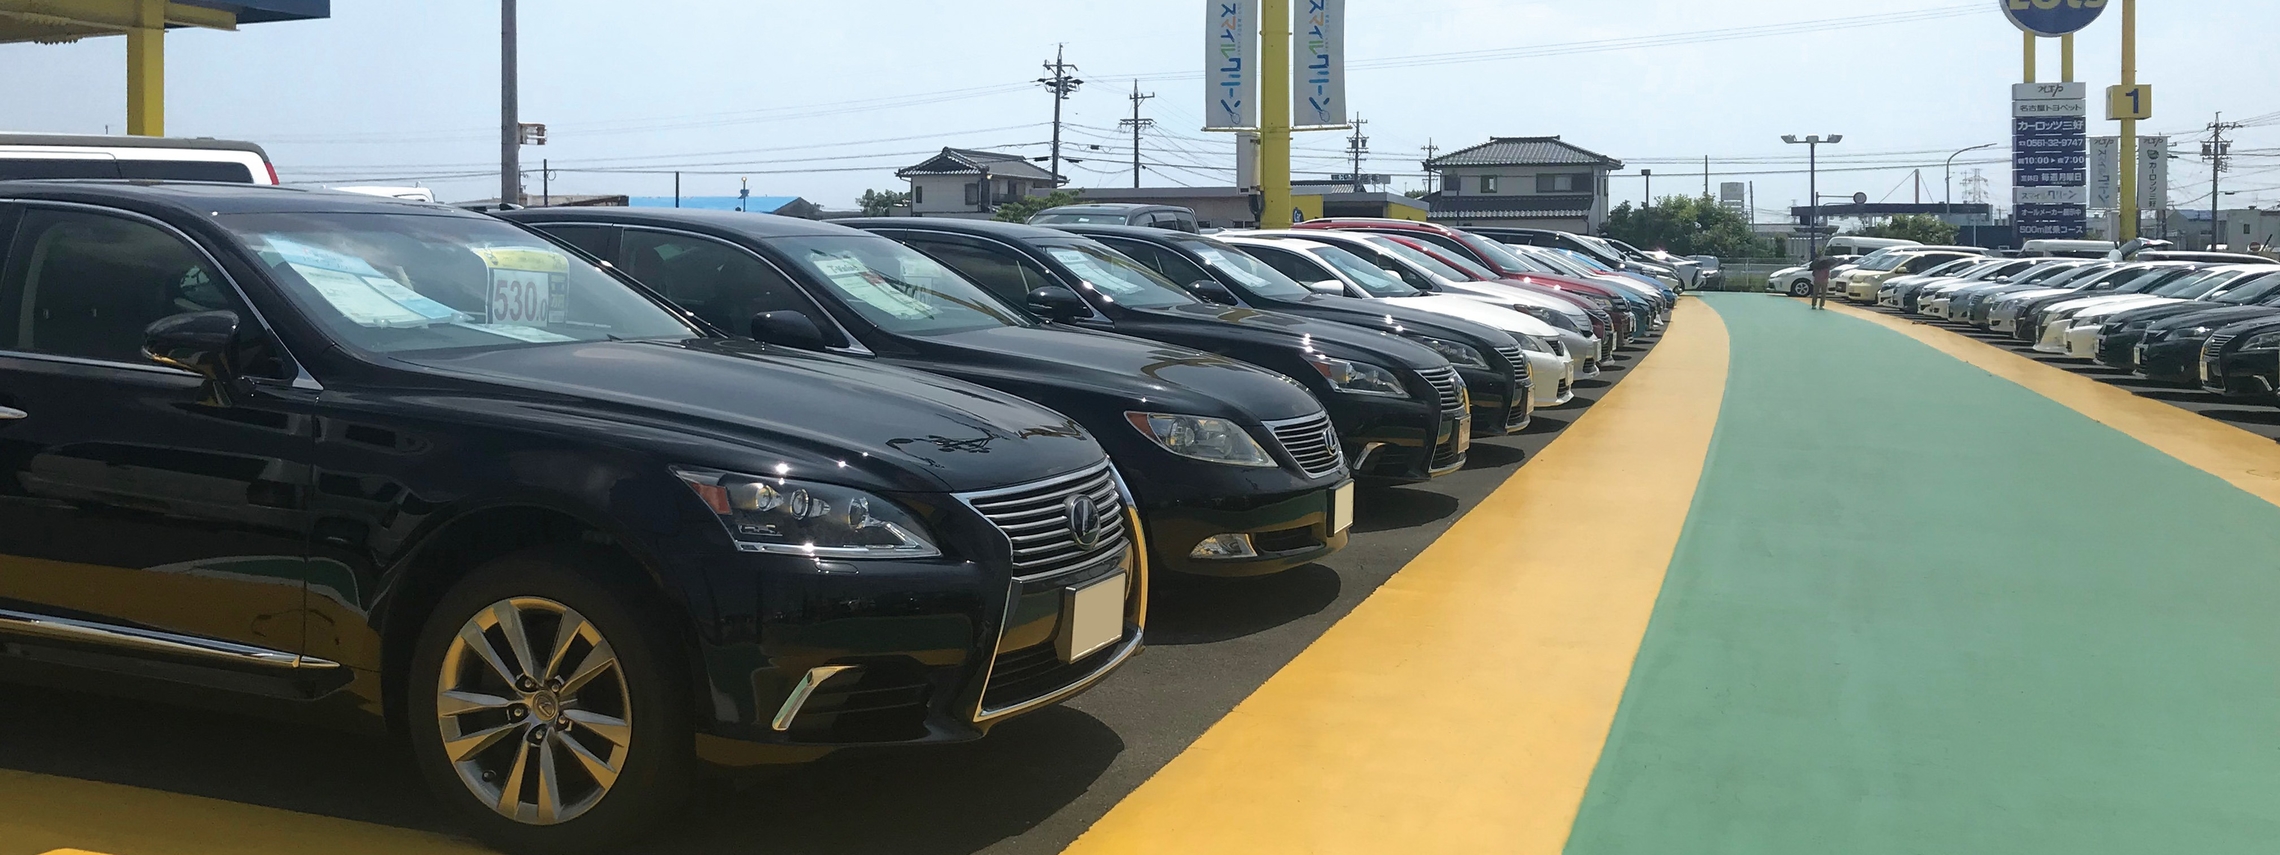 愛知県内トヨタ販売店U-Car最多27店舗の販売力